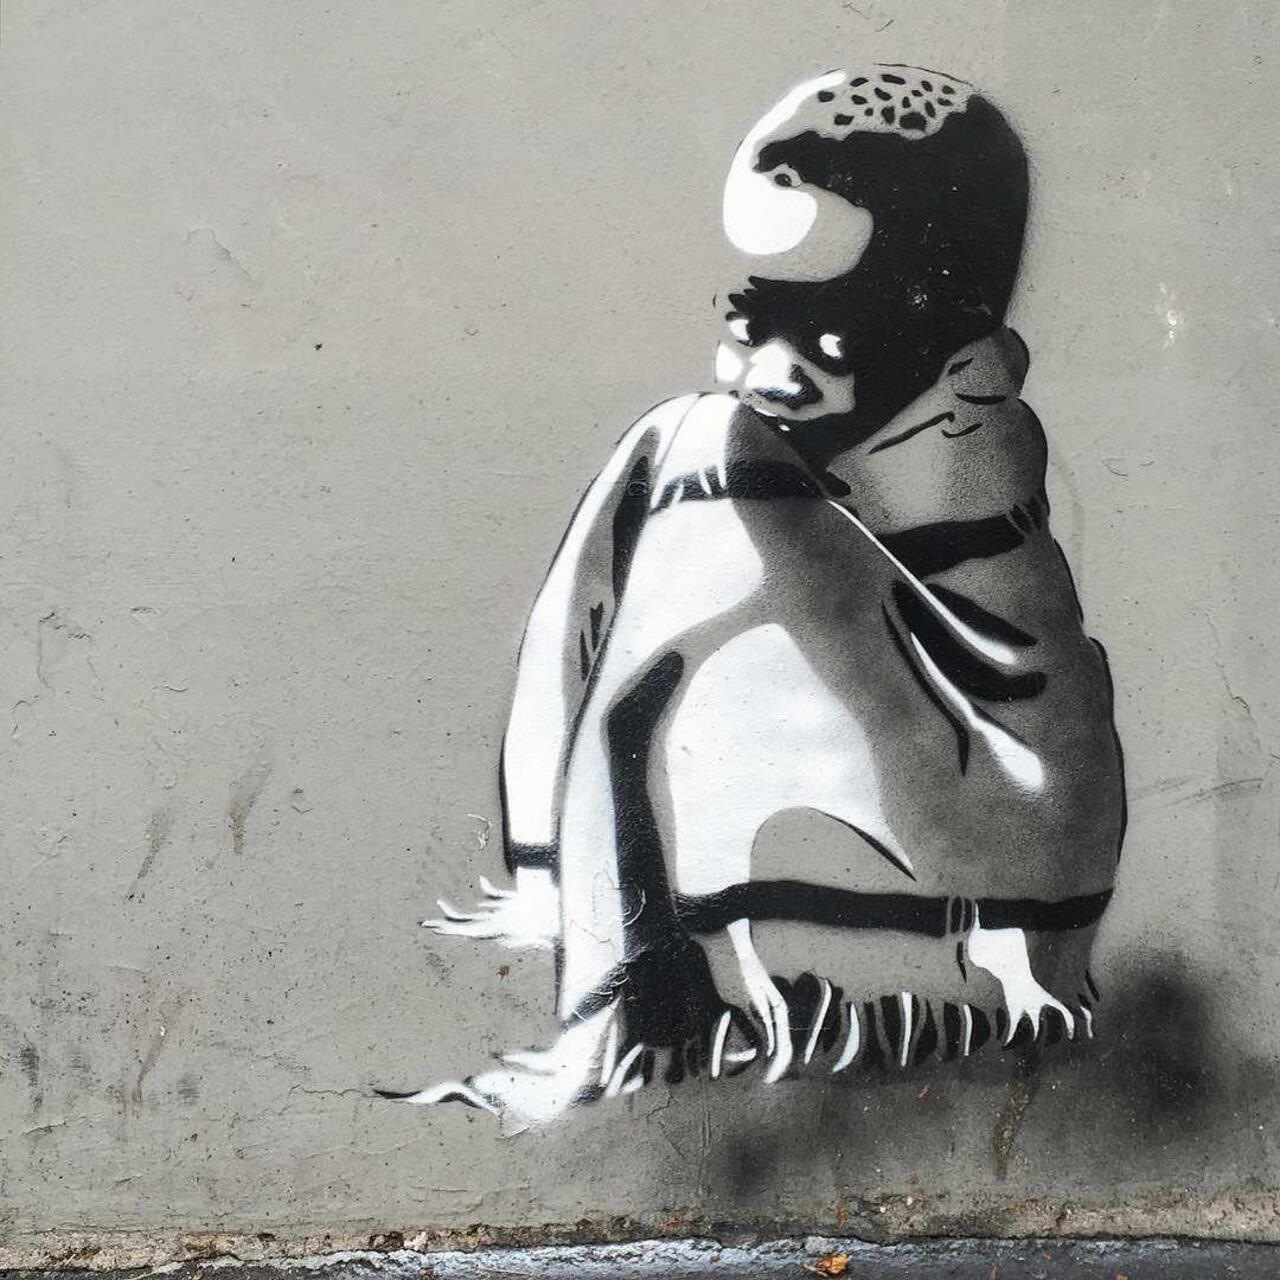 #Paris #graffiti photo by @catscoffeecreativity http://ift.tt/1PxQnCX #StreetArt http://t.co/4oTcHqu8Kn